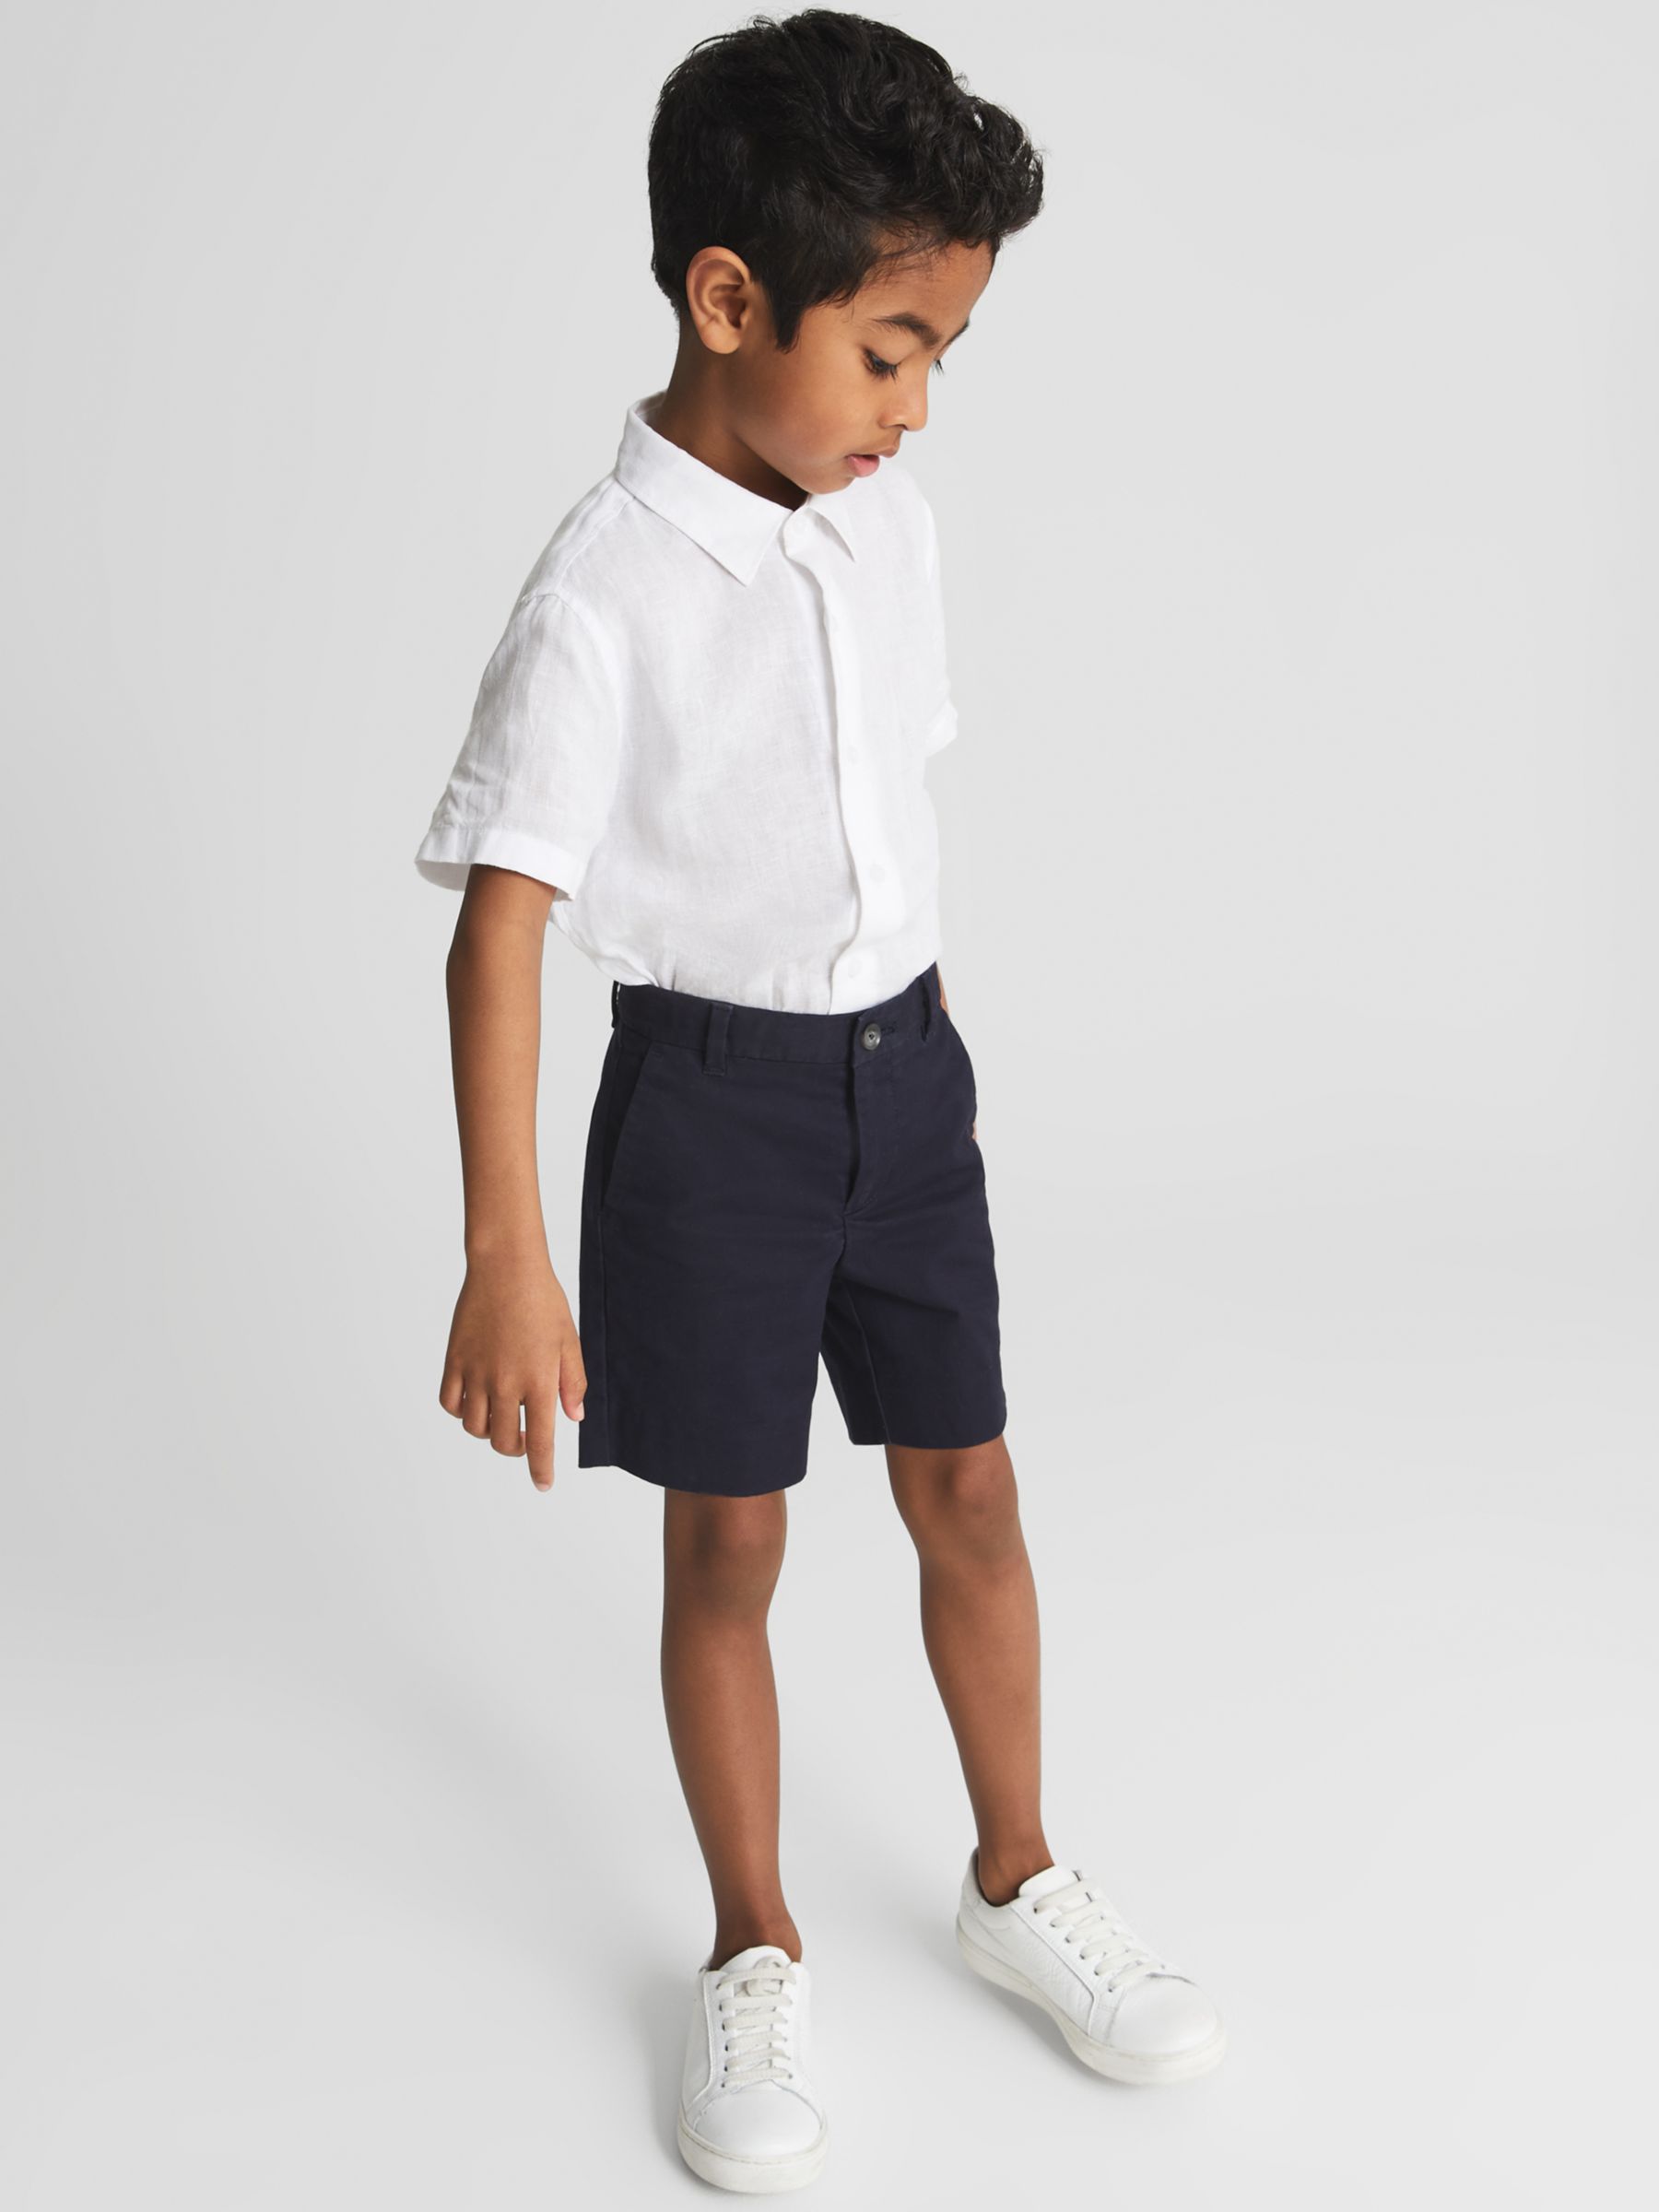 Reiss Kids' Wicket Casual Chino Shorts, Navy, 4-5 years